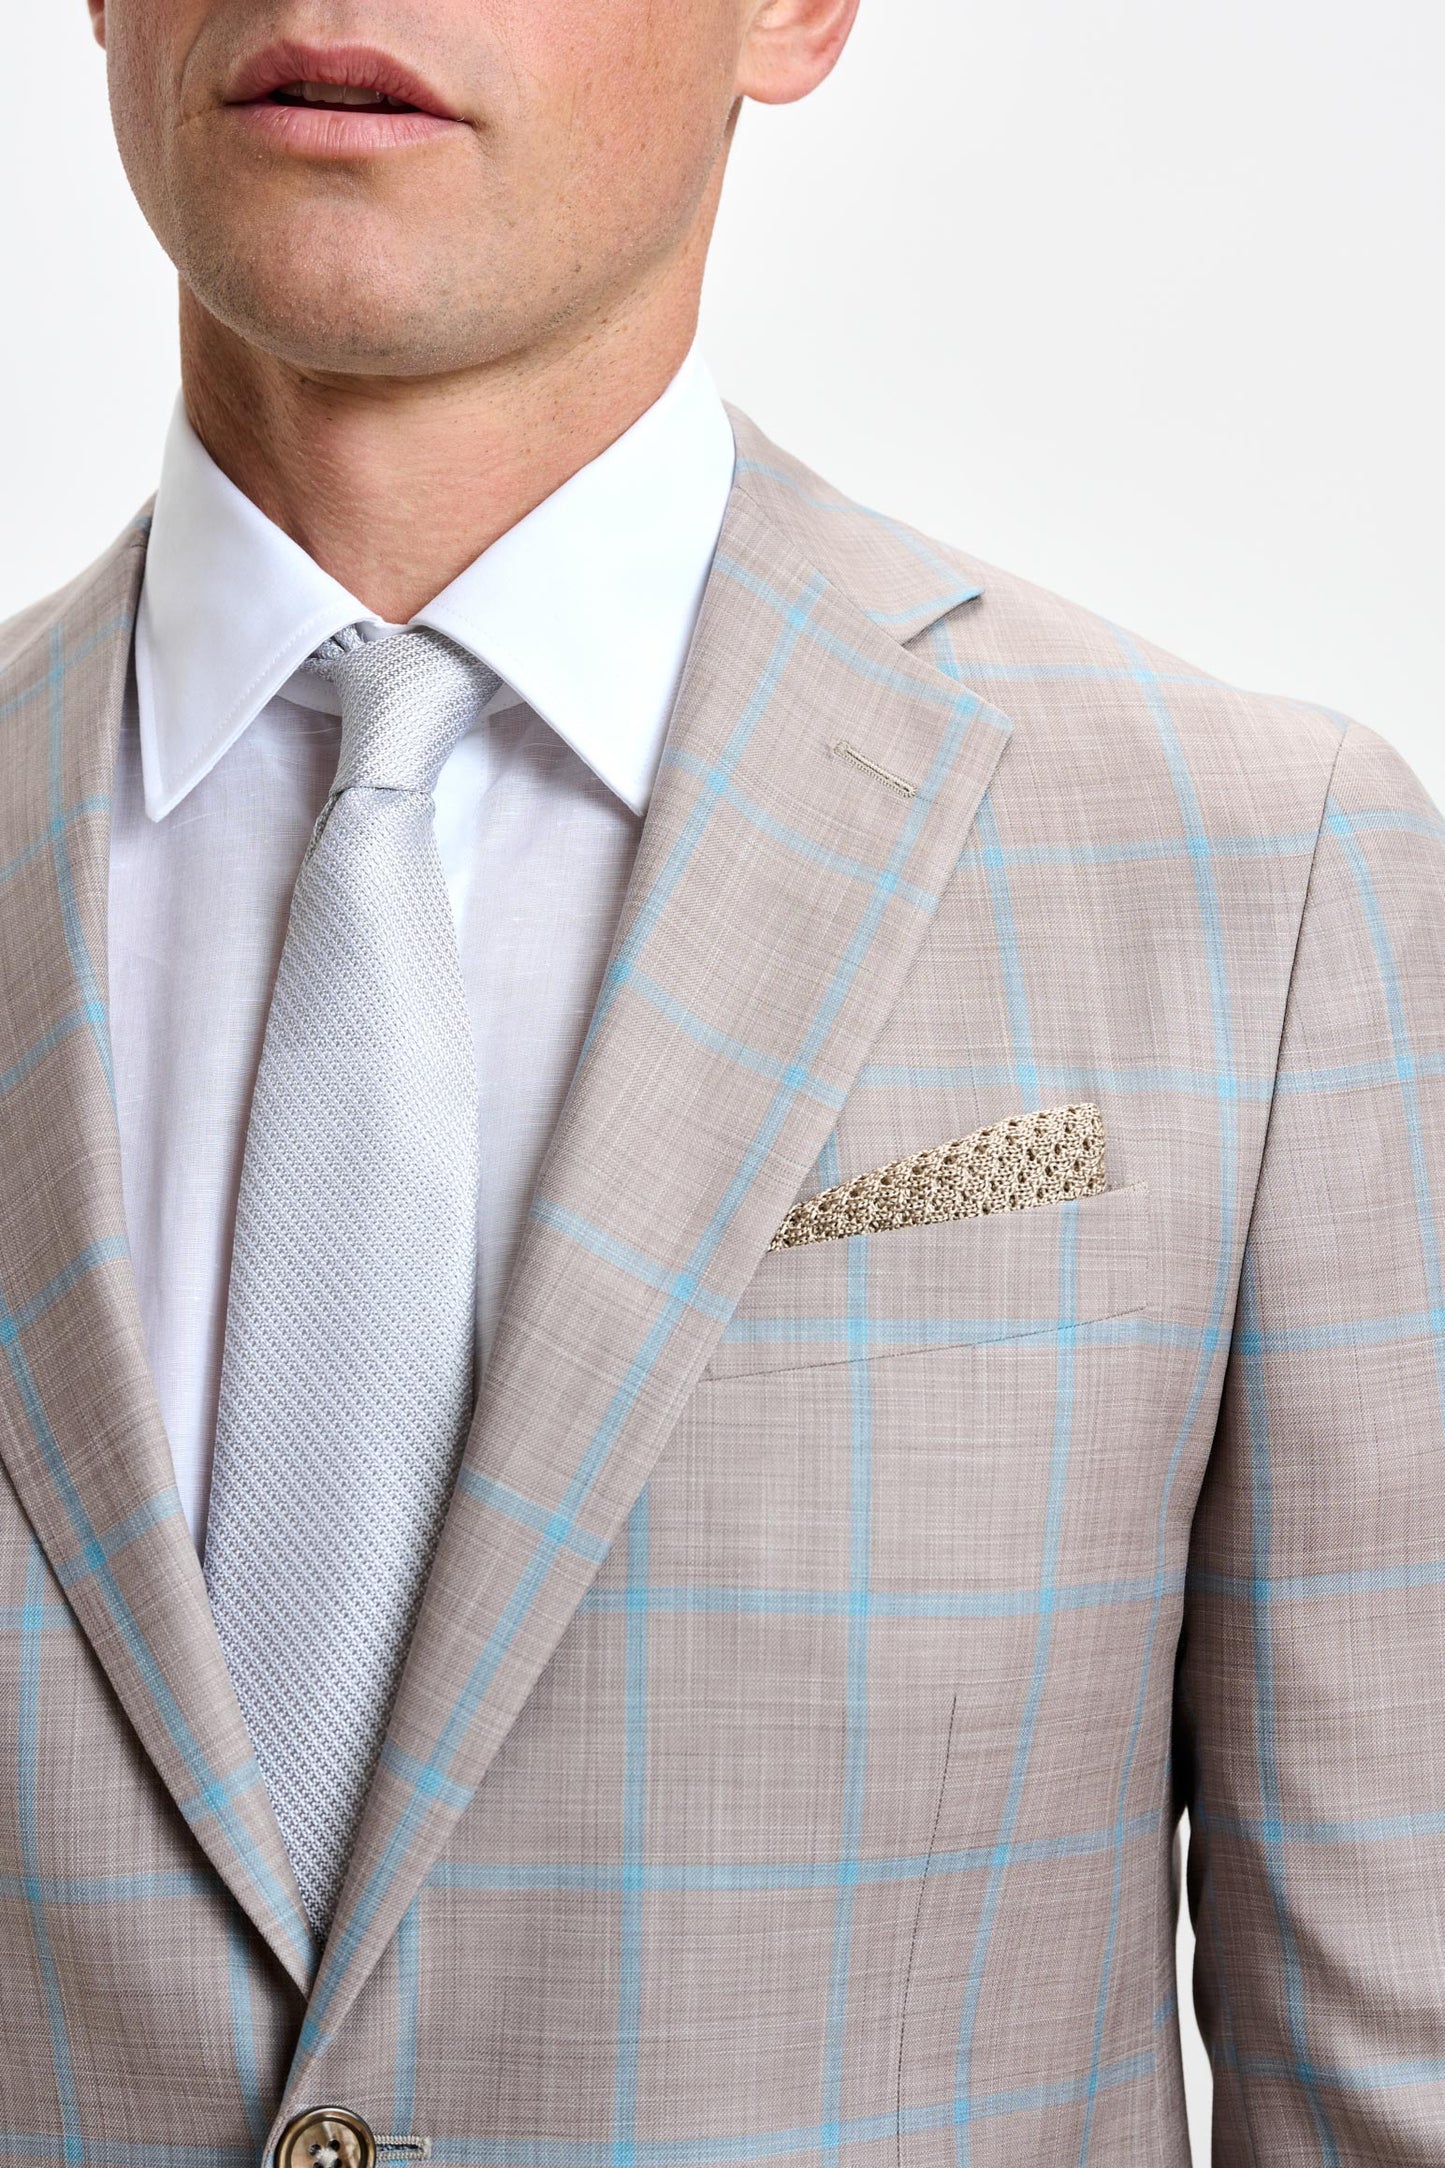 Kenton Suit Sleek Check Beige Turquoise